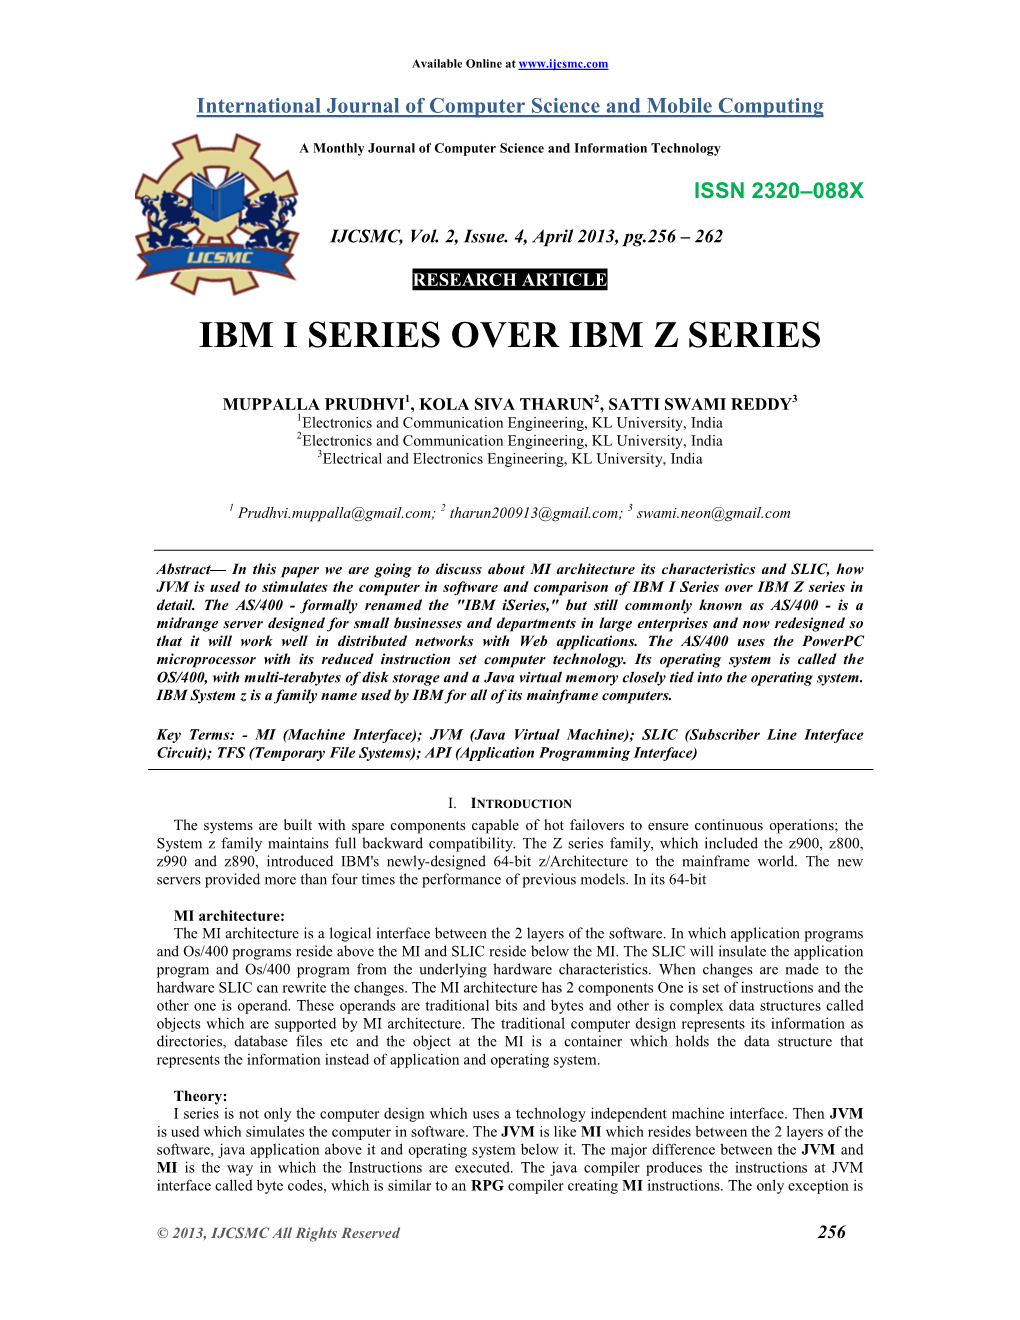 Ibm I Series Over Ibm Z Series